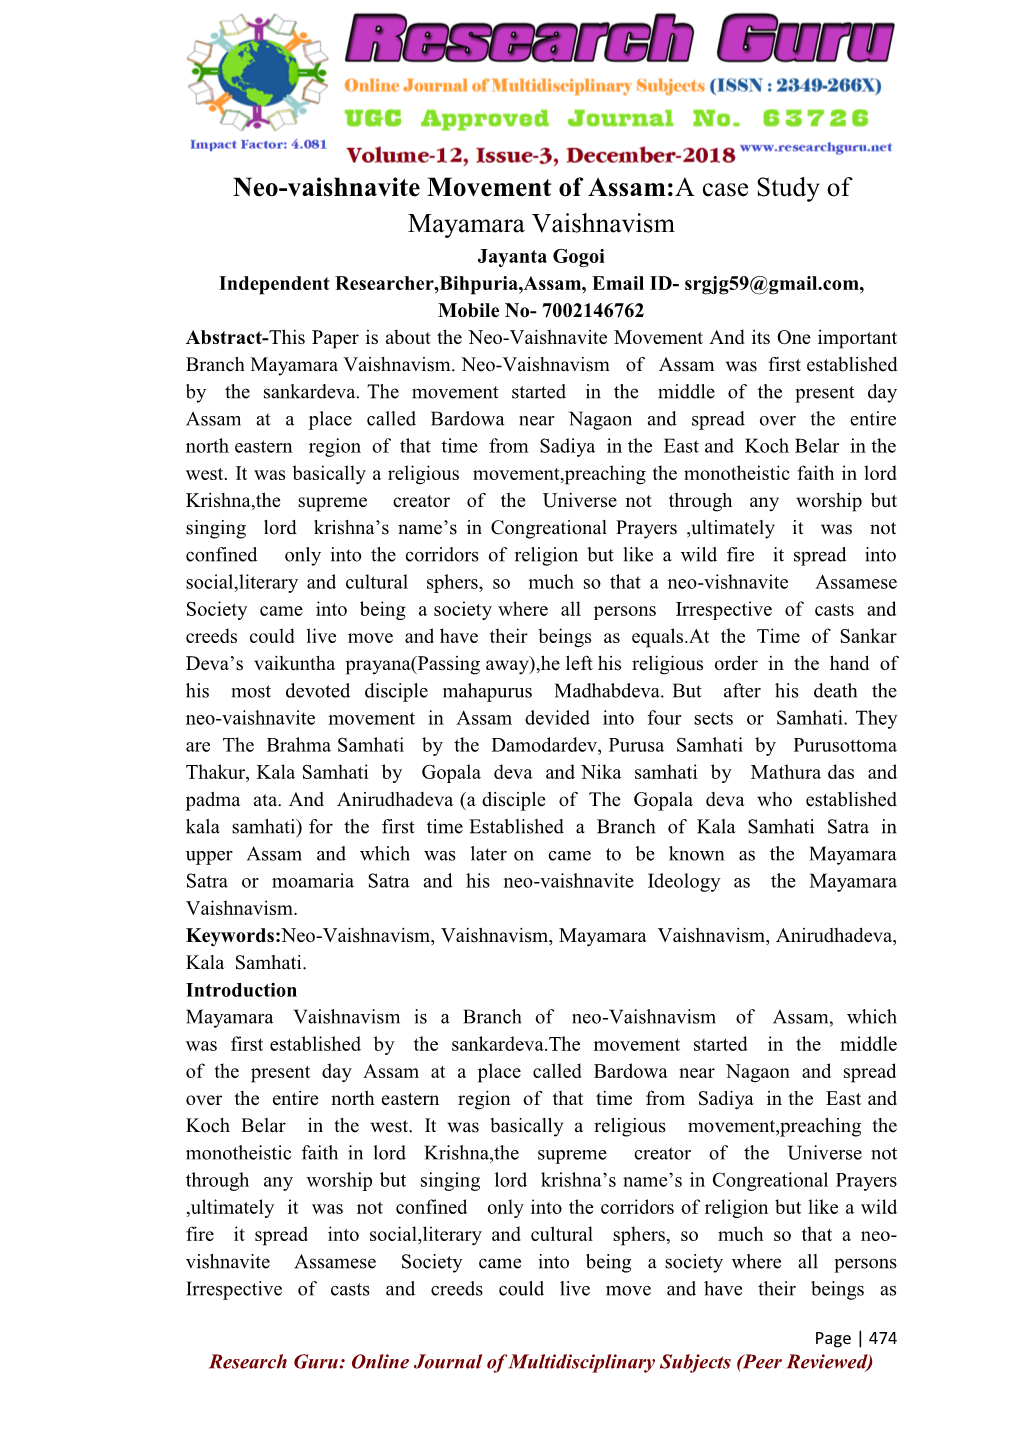 Neo-Vaishnavite Movement of Assam:A Case Study of Mayamara